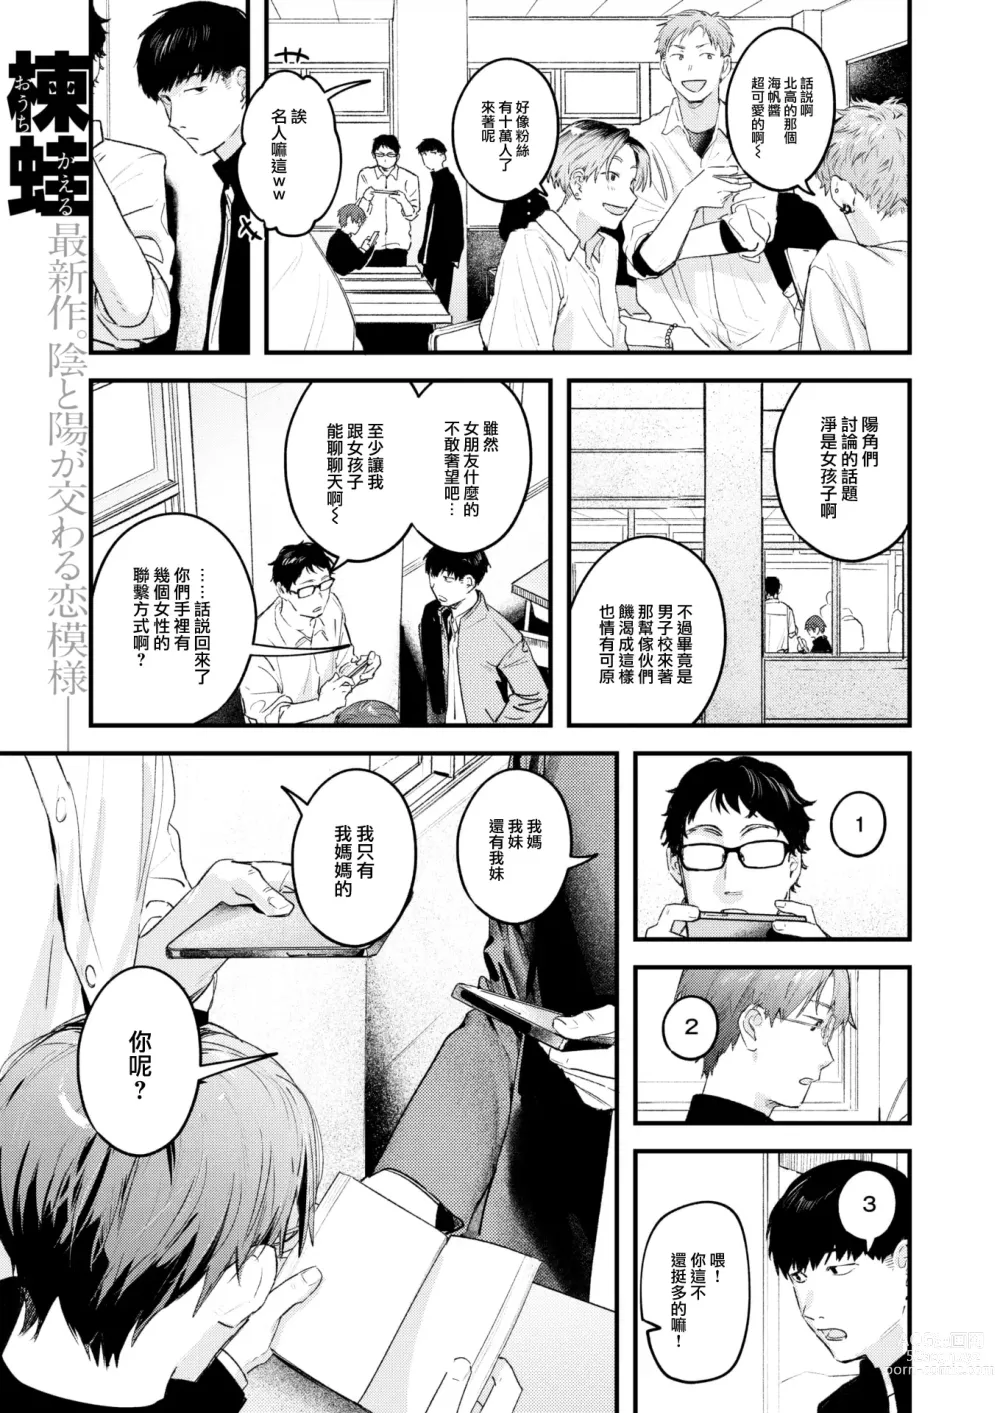 Page 2 of manga Oazuke - The hidden emotions.